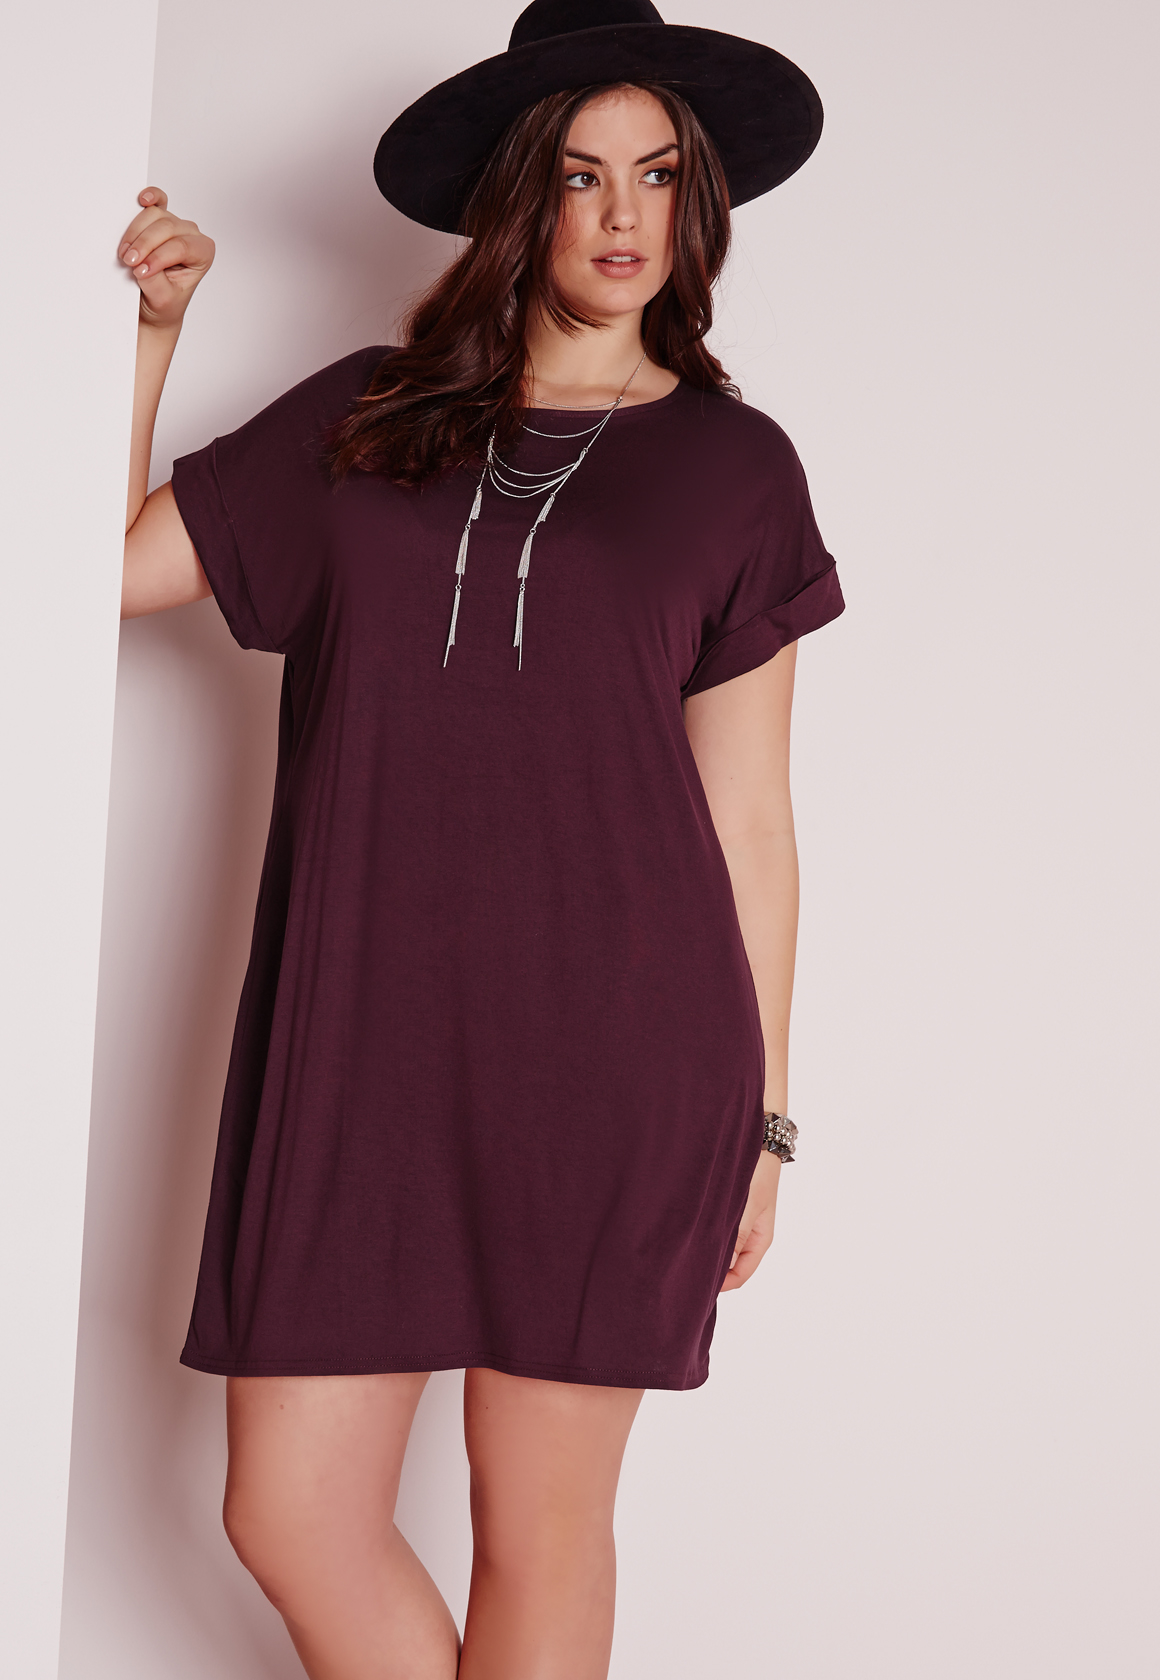 Lyst Missguided Plus  Size  T shirt  Dress  Purple  in Purple 